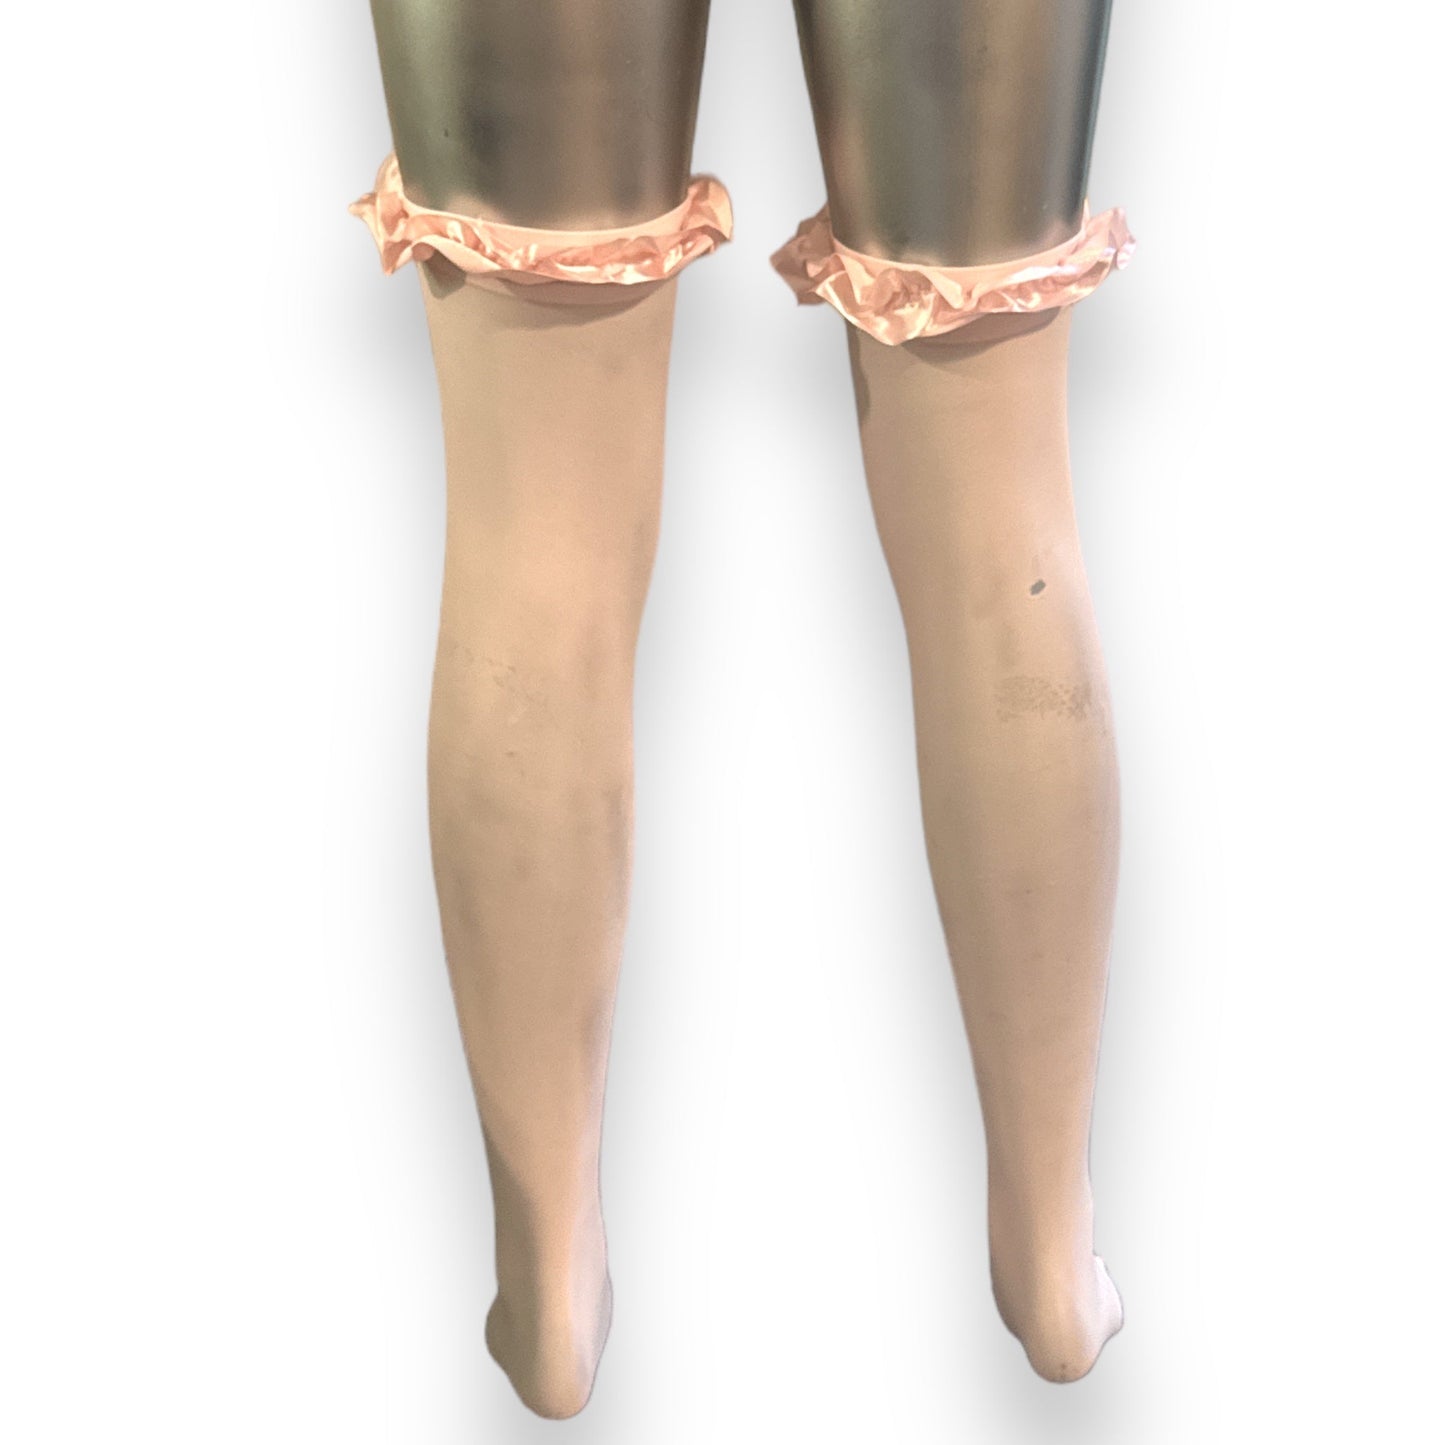 Lichtroze Stockings met Elegant Strikje - Verkrijgbaar in S/M en L/XL Maten